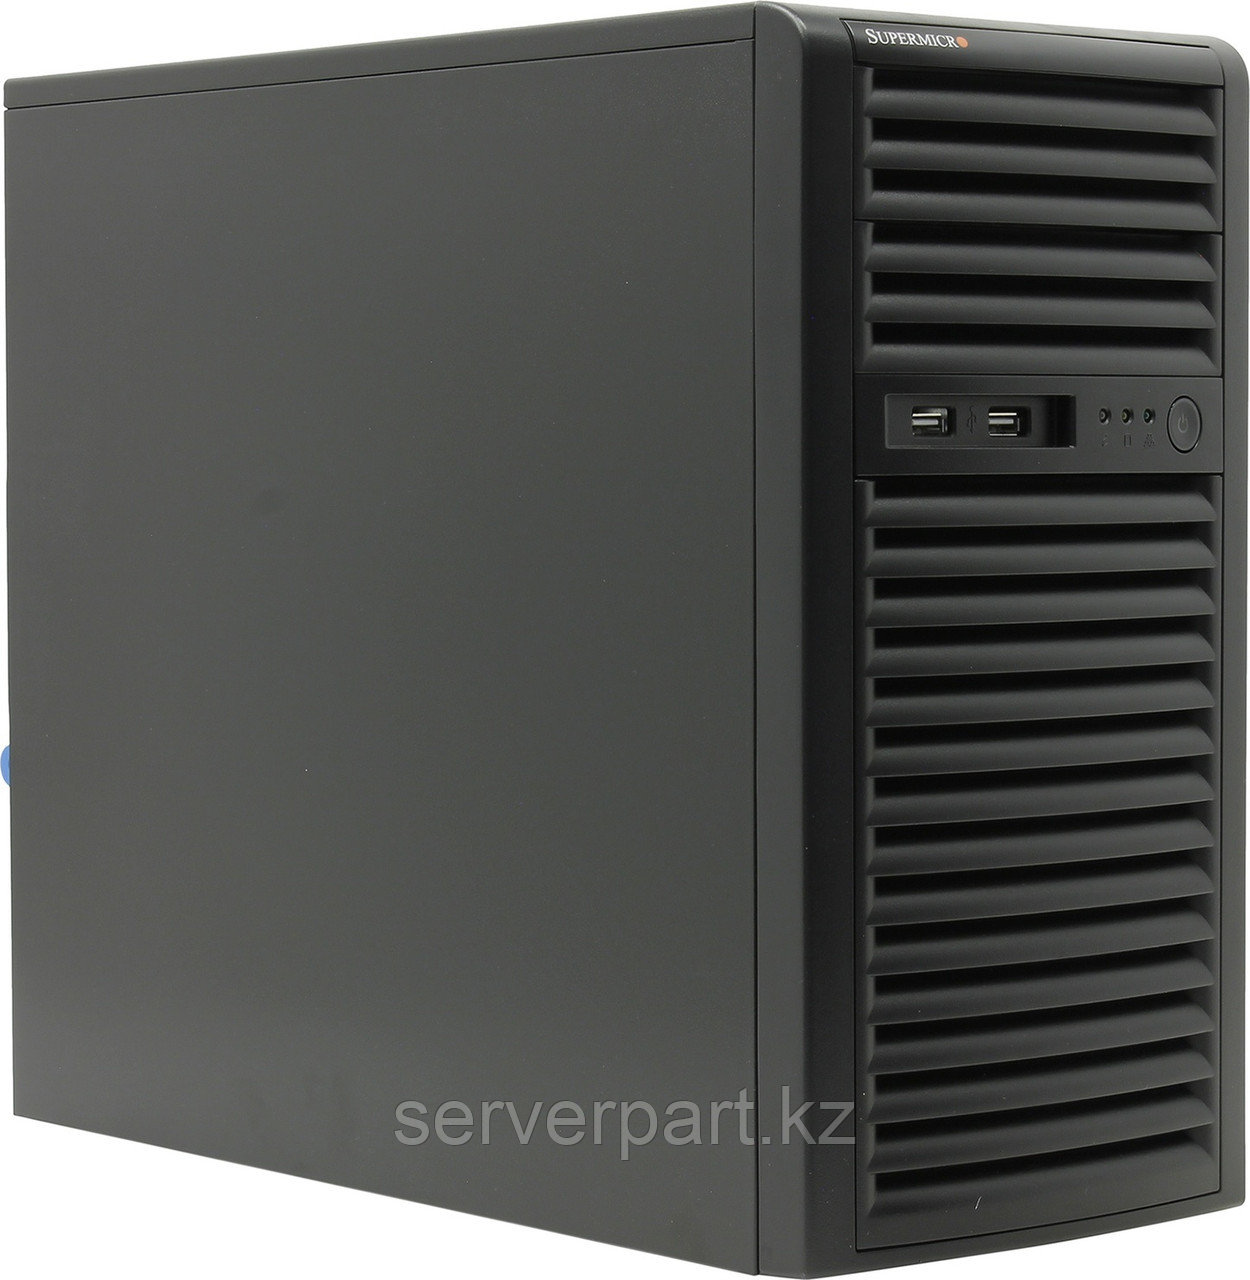 Сервер Supermicro SYS-5039D Tower/4-core intel xeon E3-1220v6 3GHz/48GB UDIMM nECC/1x480GB SSD RI Hyb, фото 1